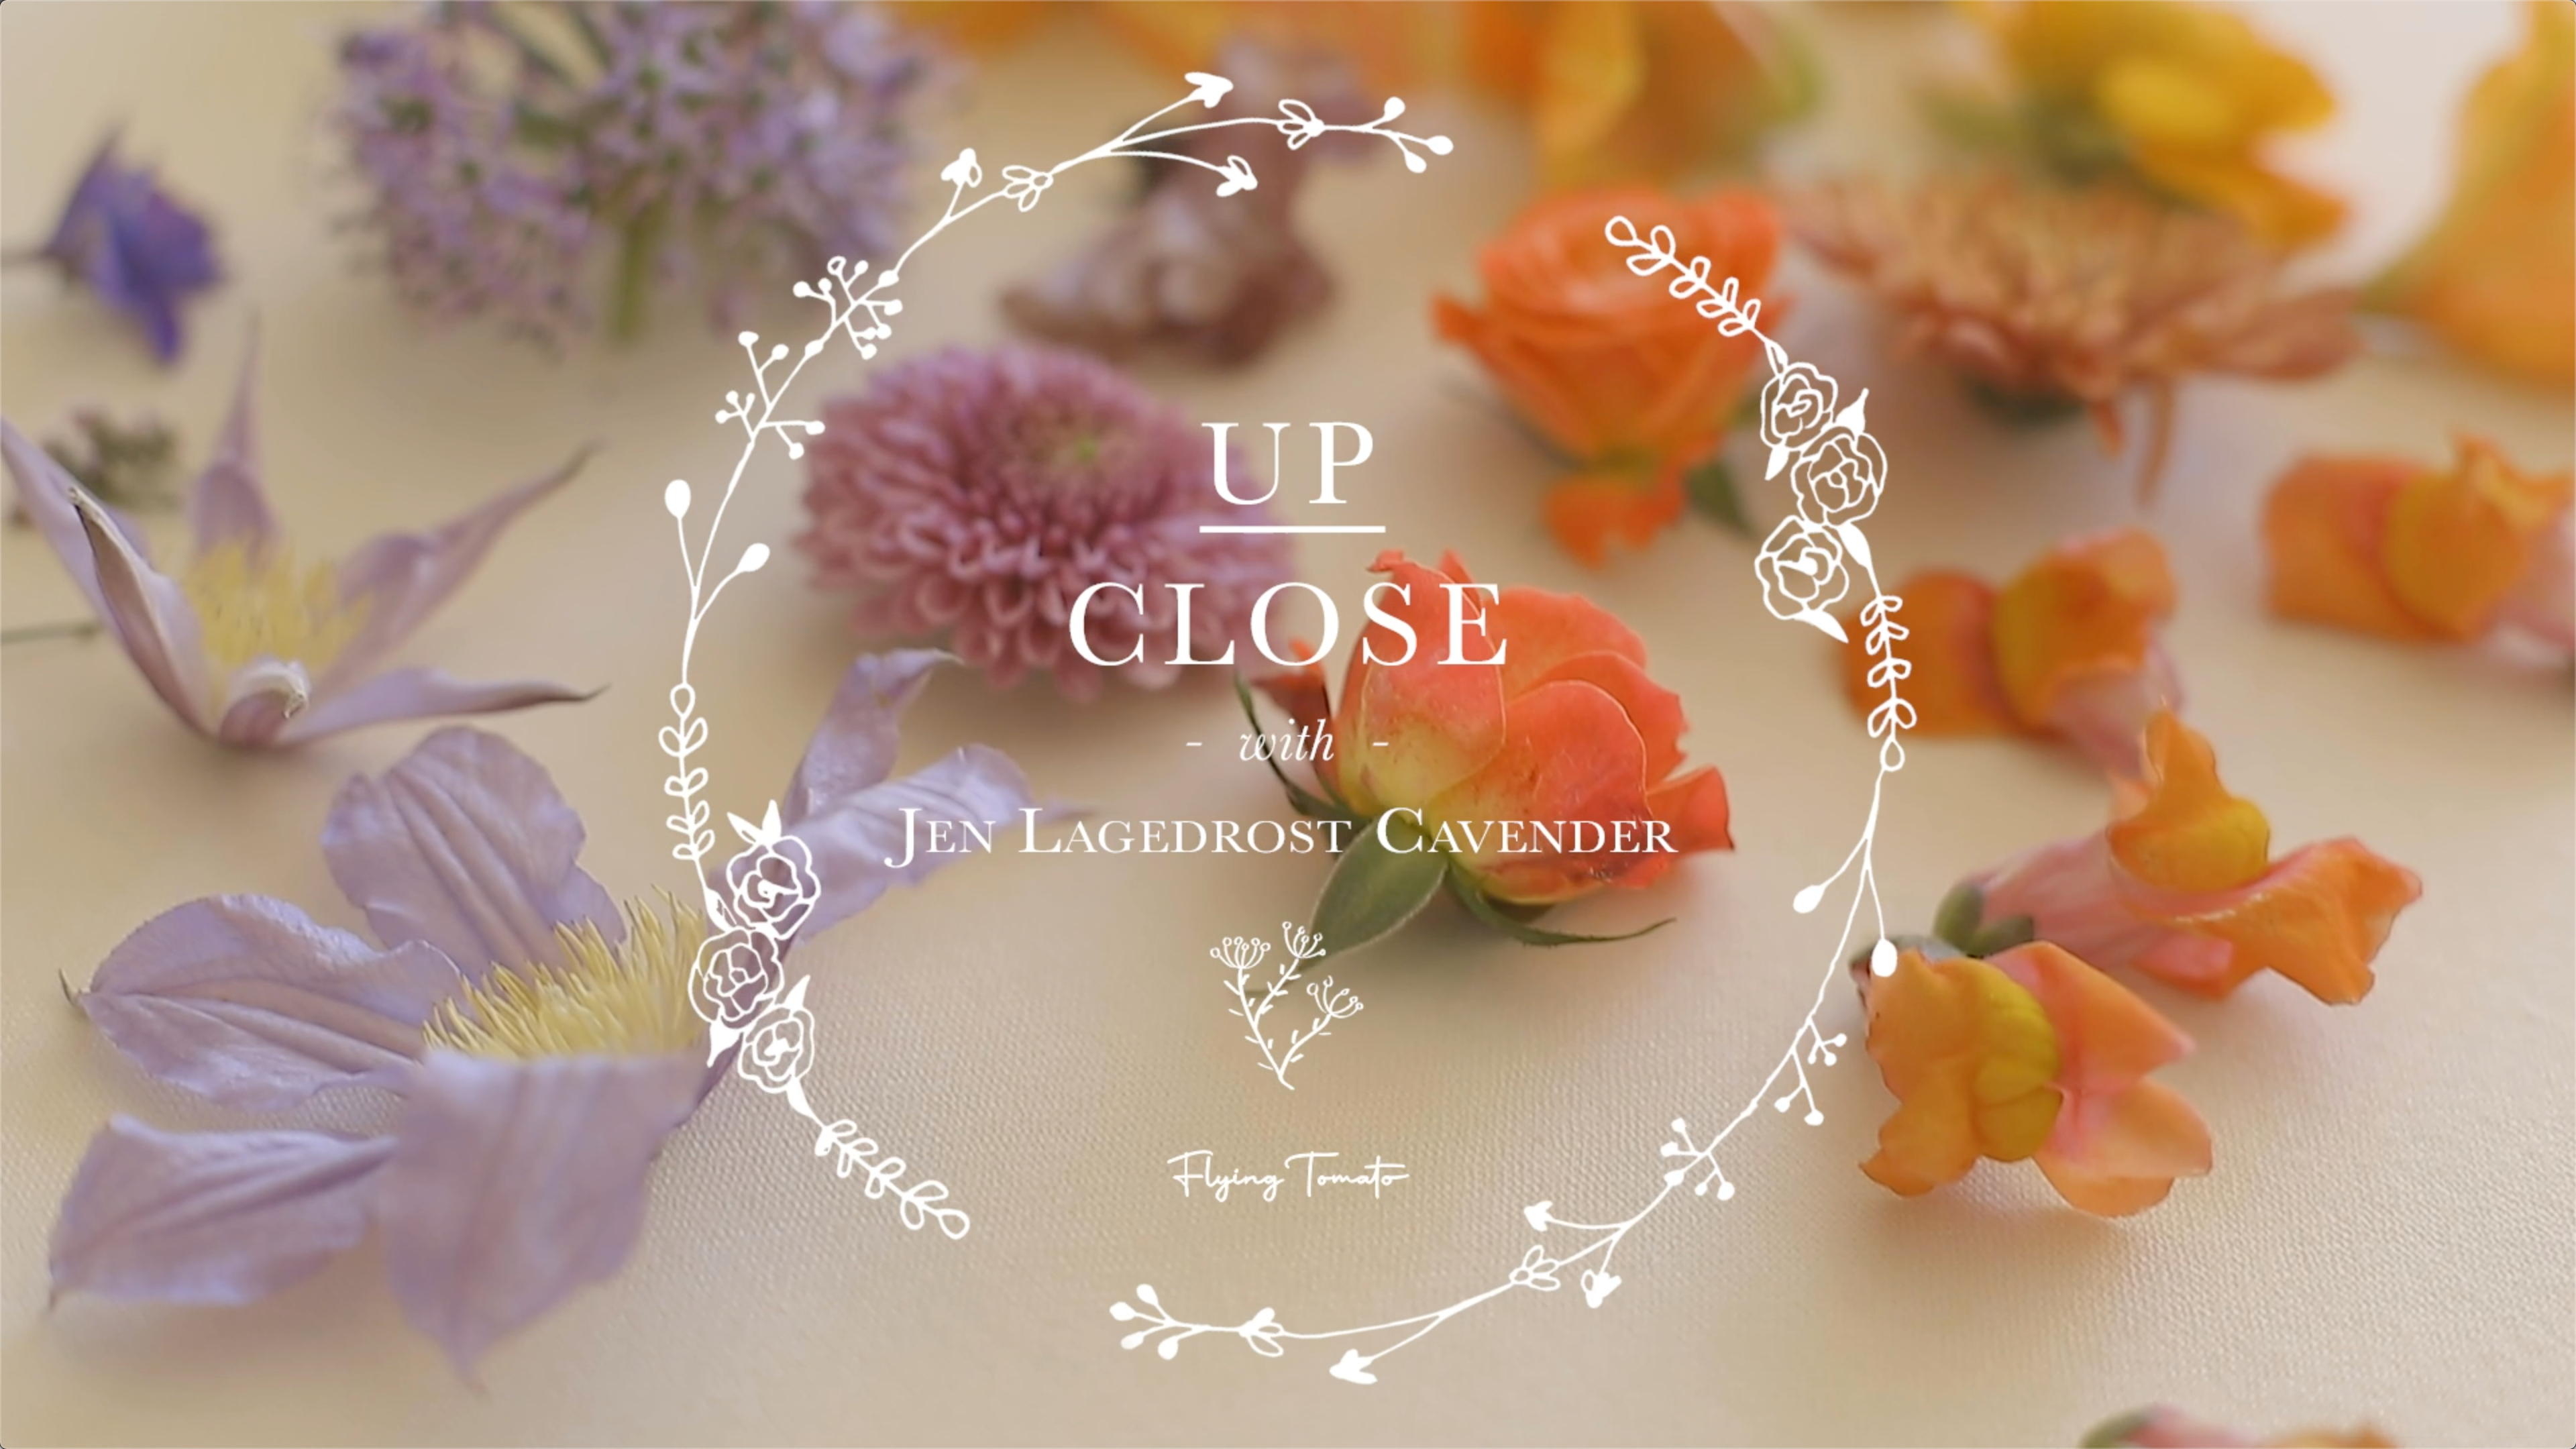 ”Up close" with Jen Lagedrost Cavender